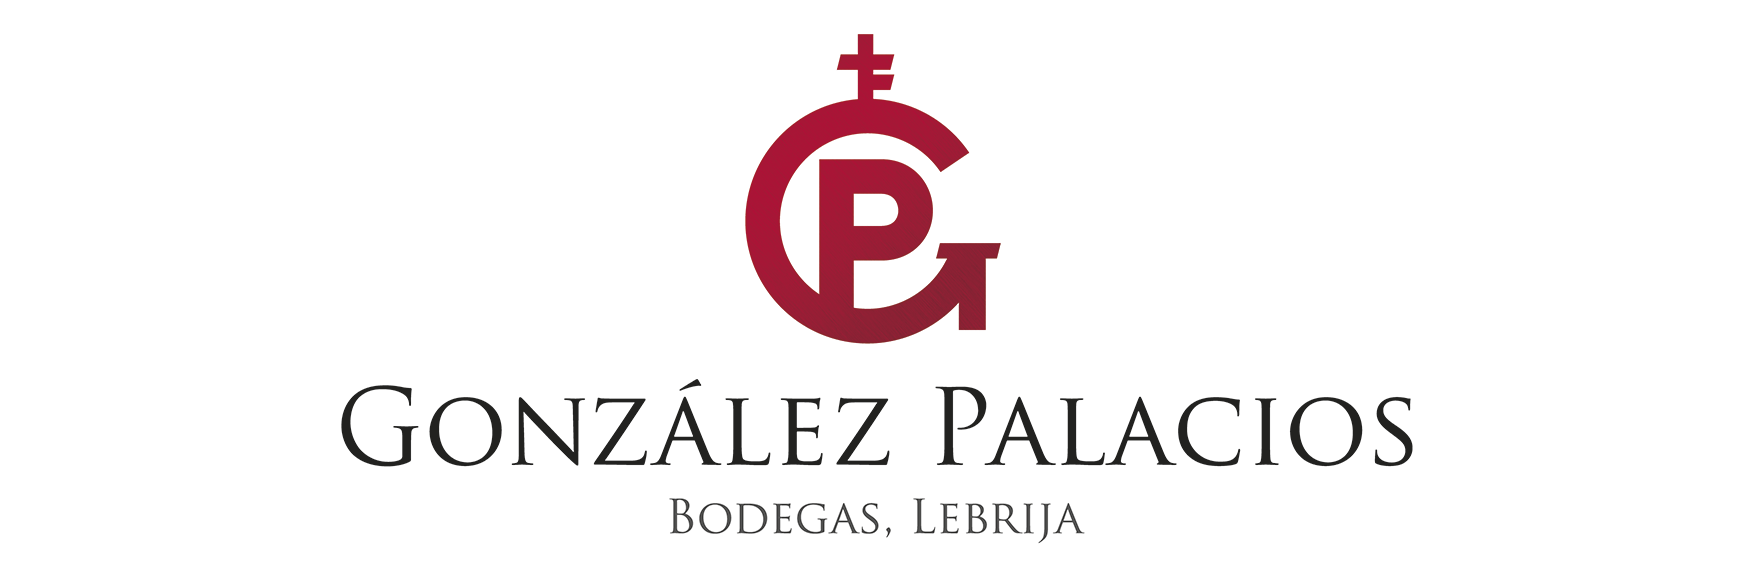 Gonzalez Palacios